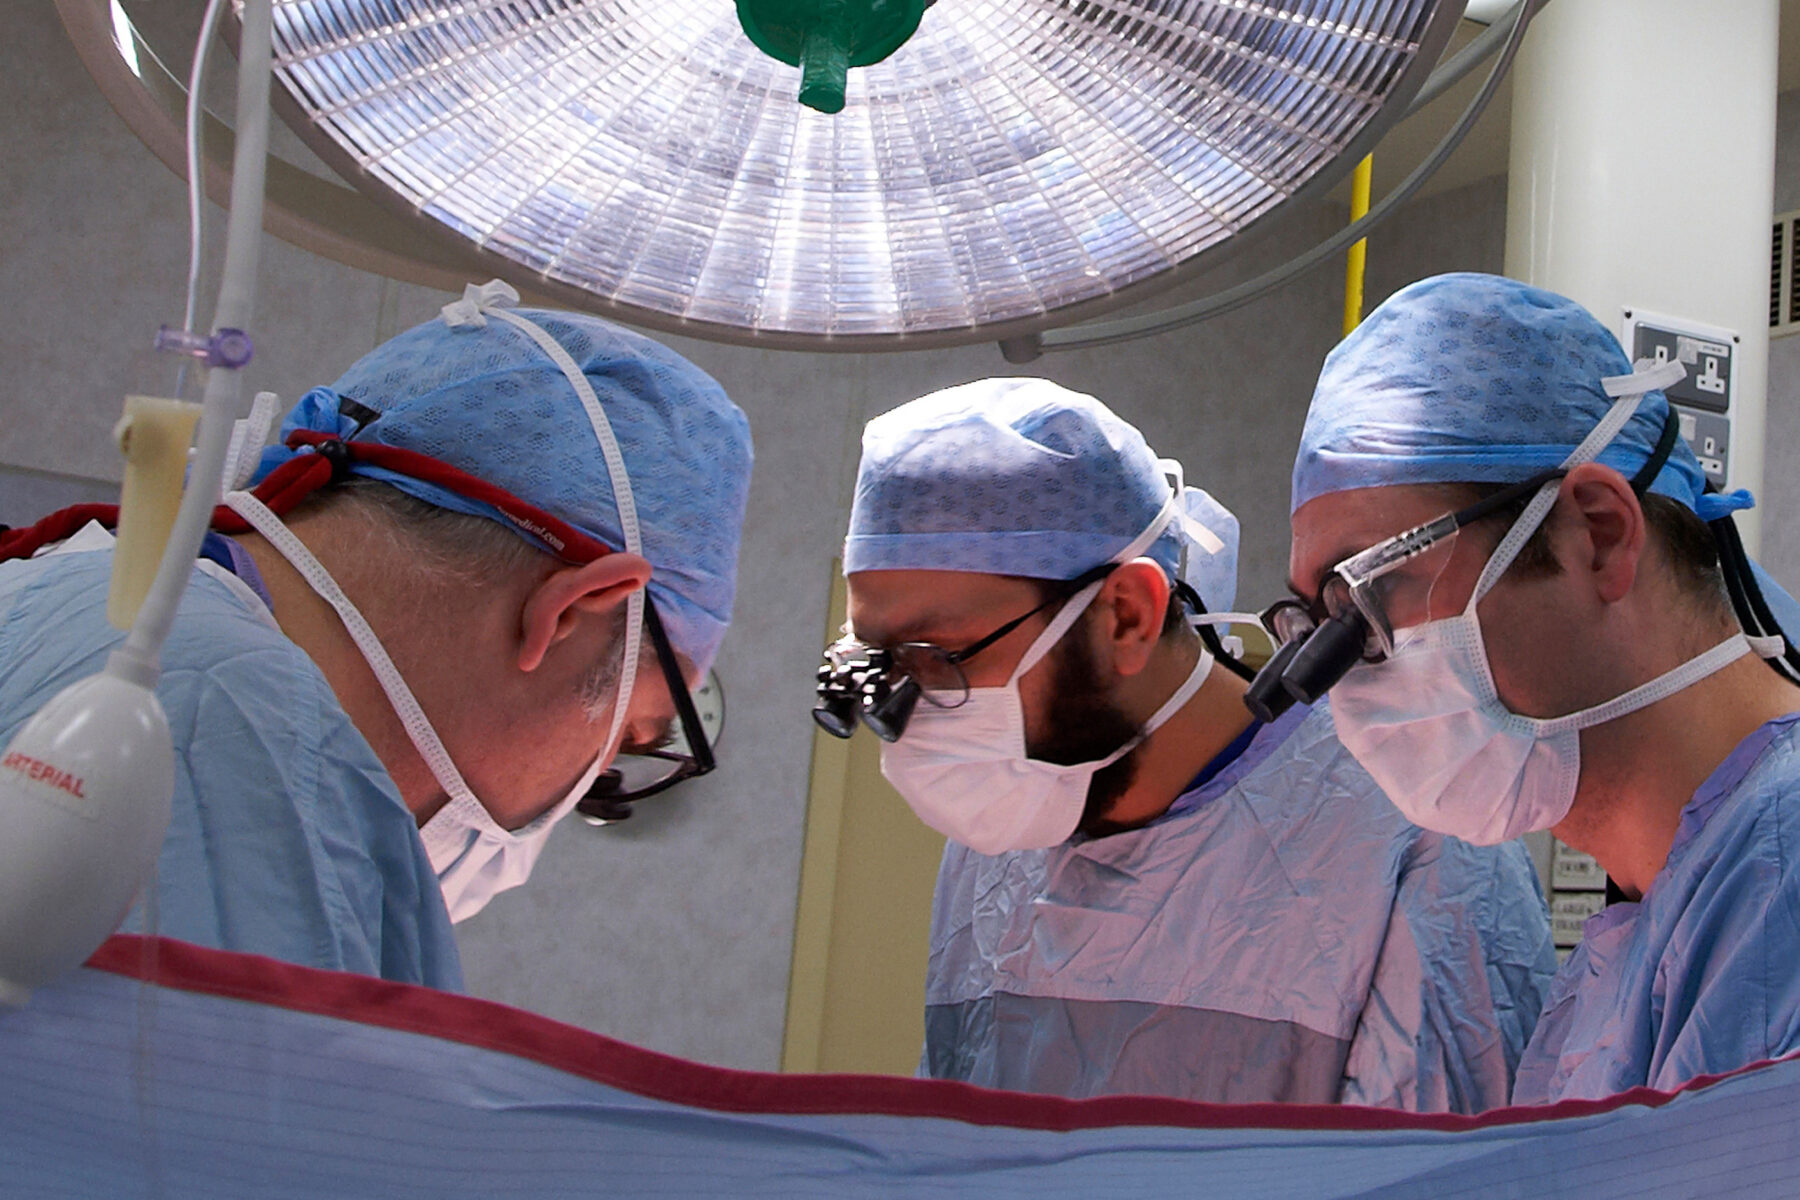 Three NHS surgeons operating under theatre lights.